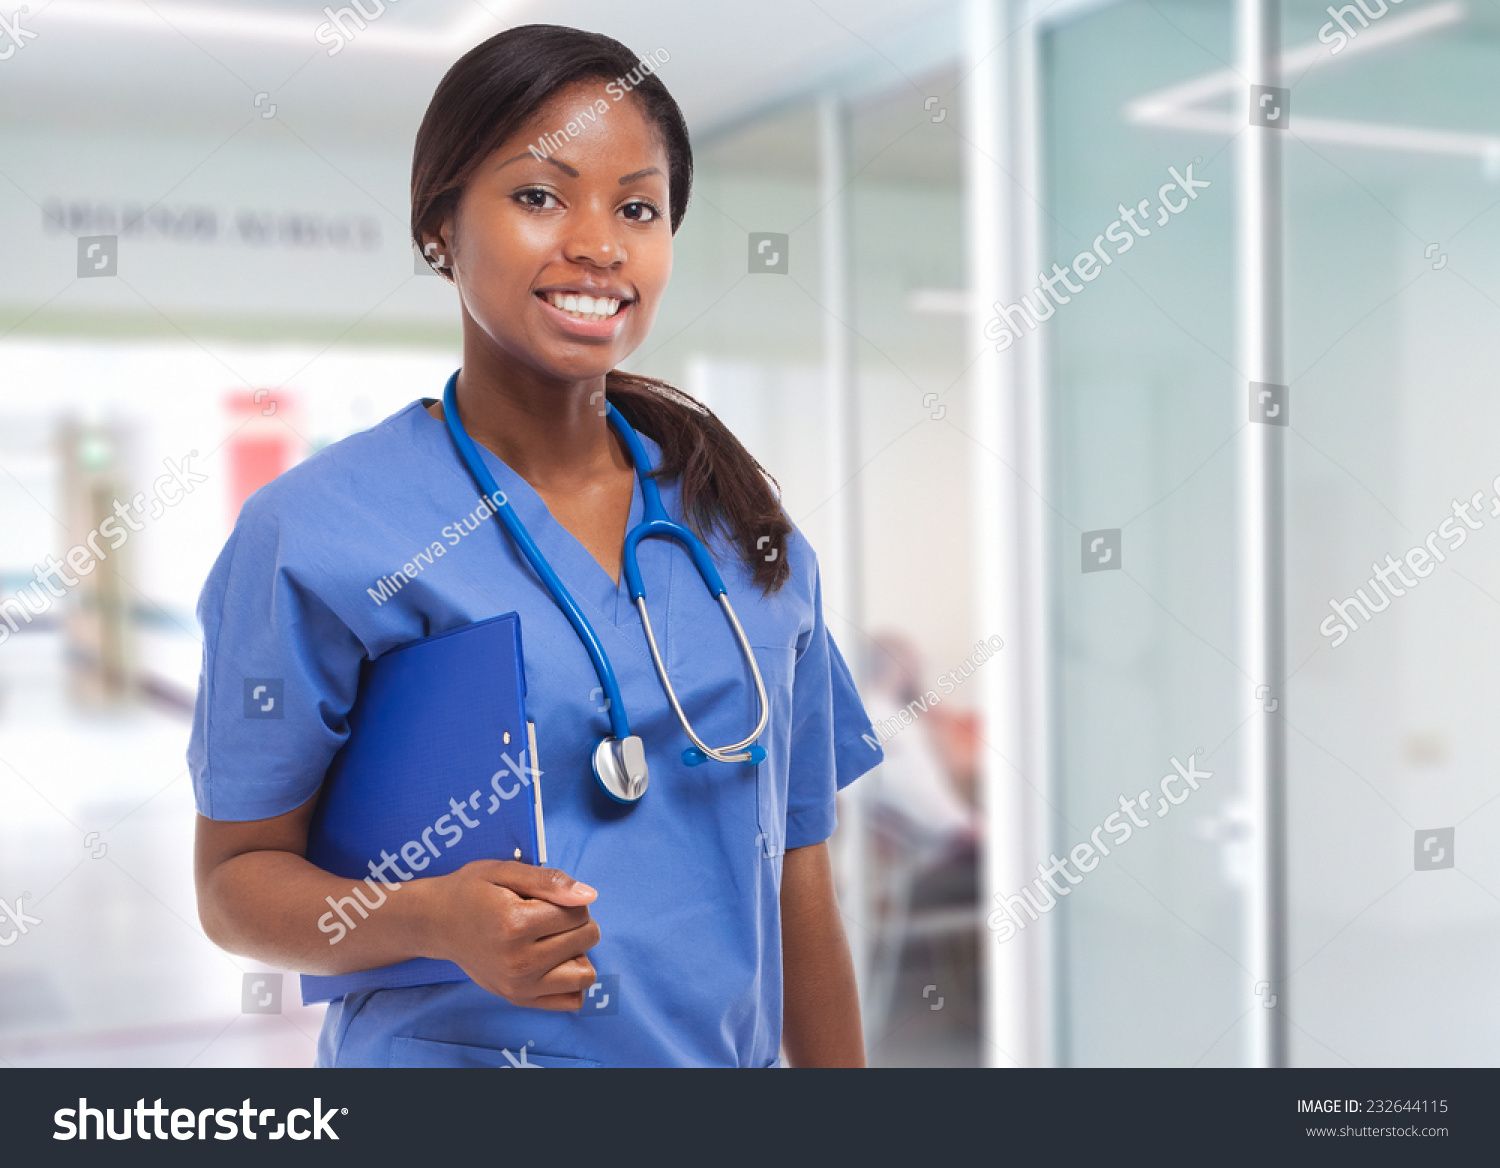 Black Nurse Portrait Stock Photo 232644115 : Shutterstock